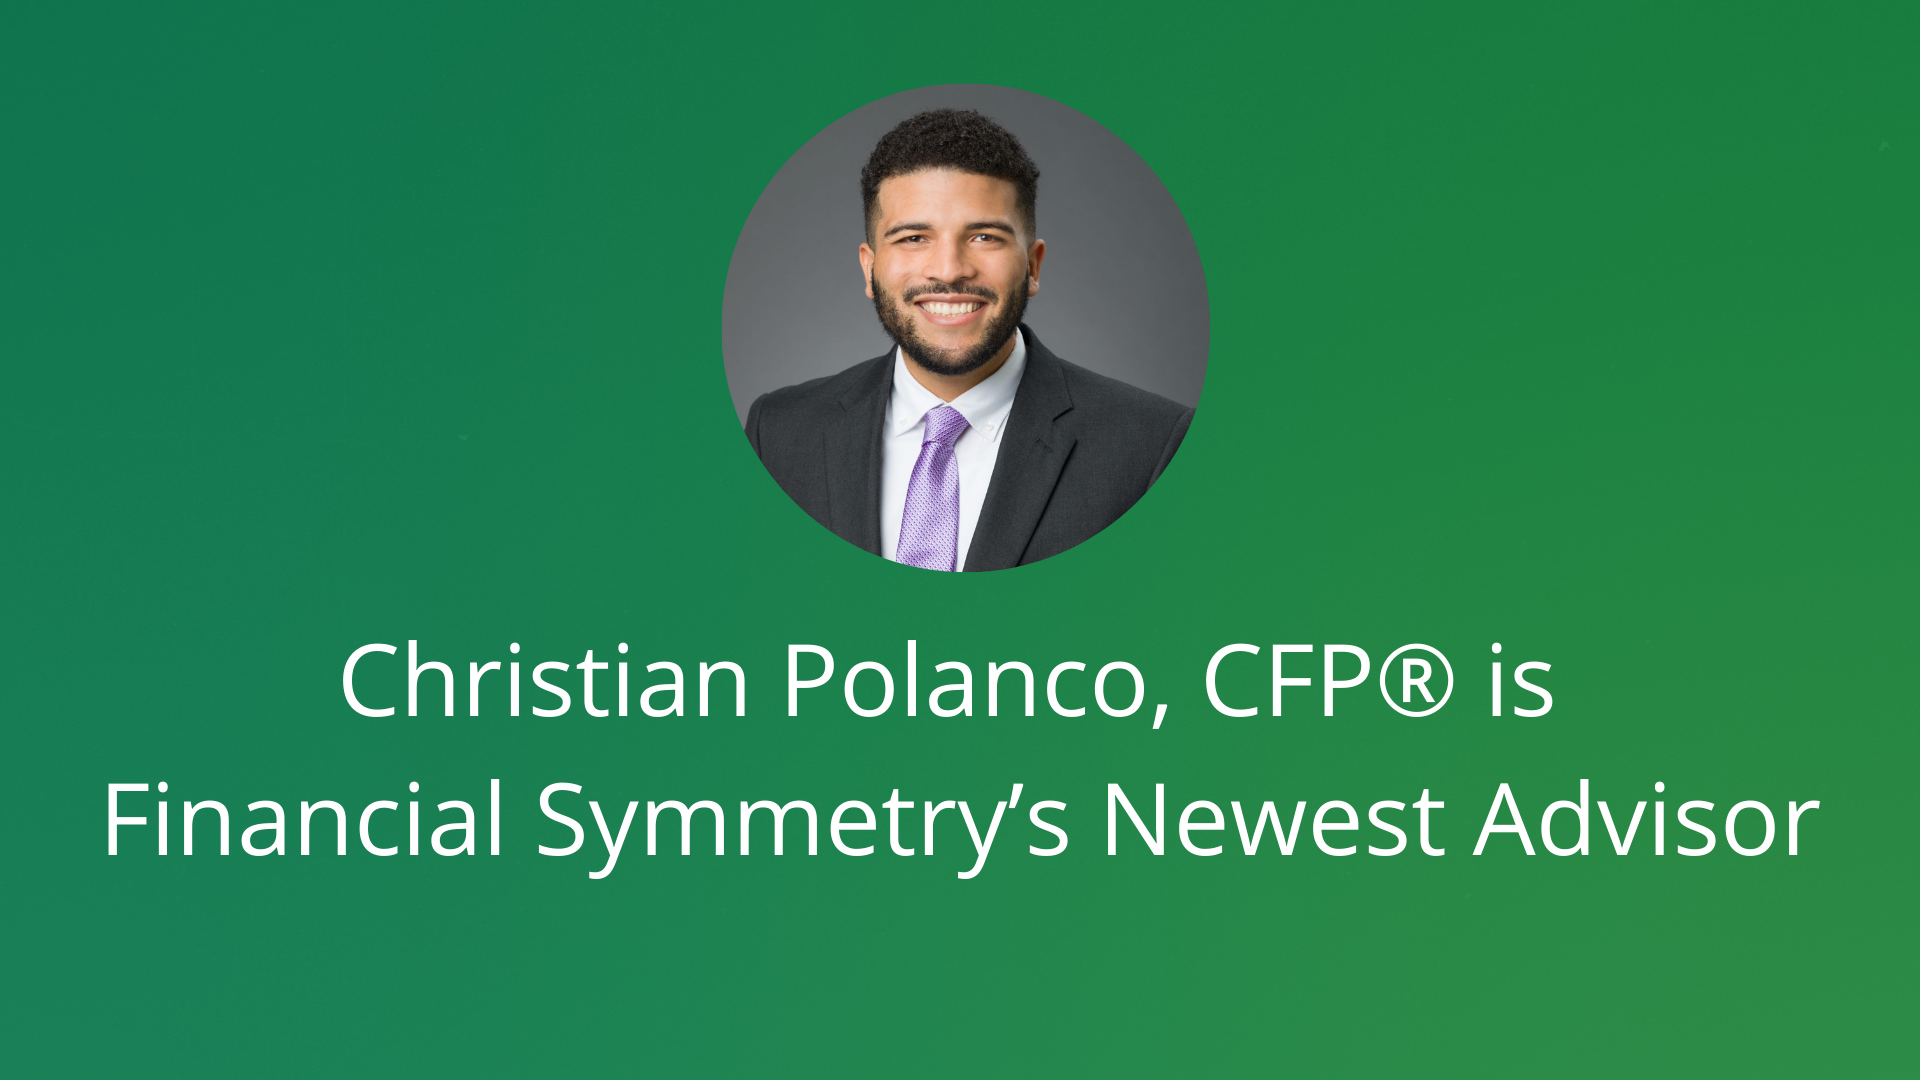 Christian Polanco, CFP® is Financial Symmetry’s Newest Advisor-Financial Symmetry, Inc.